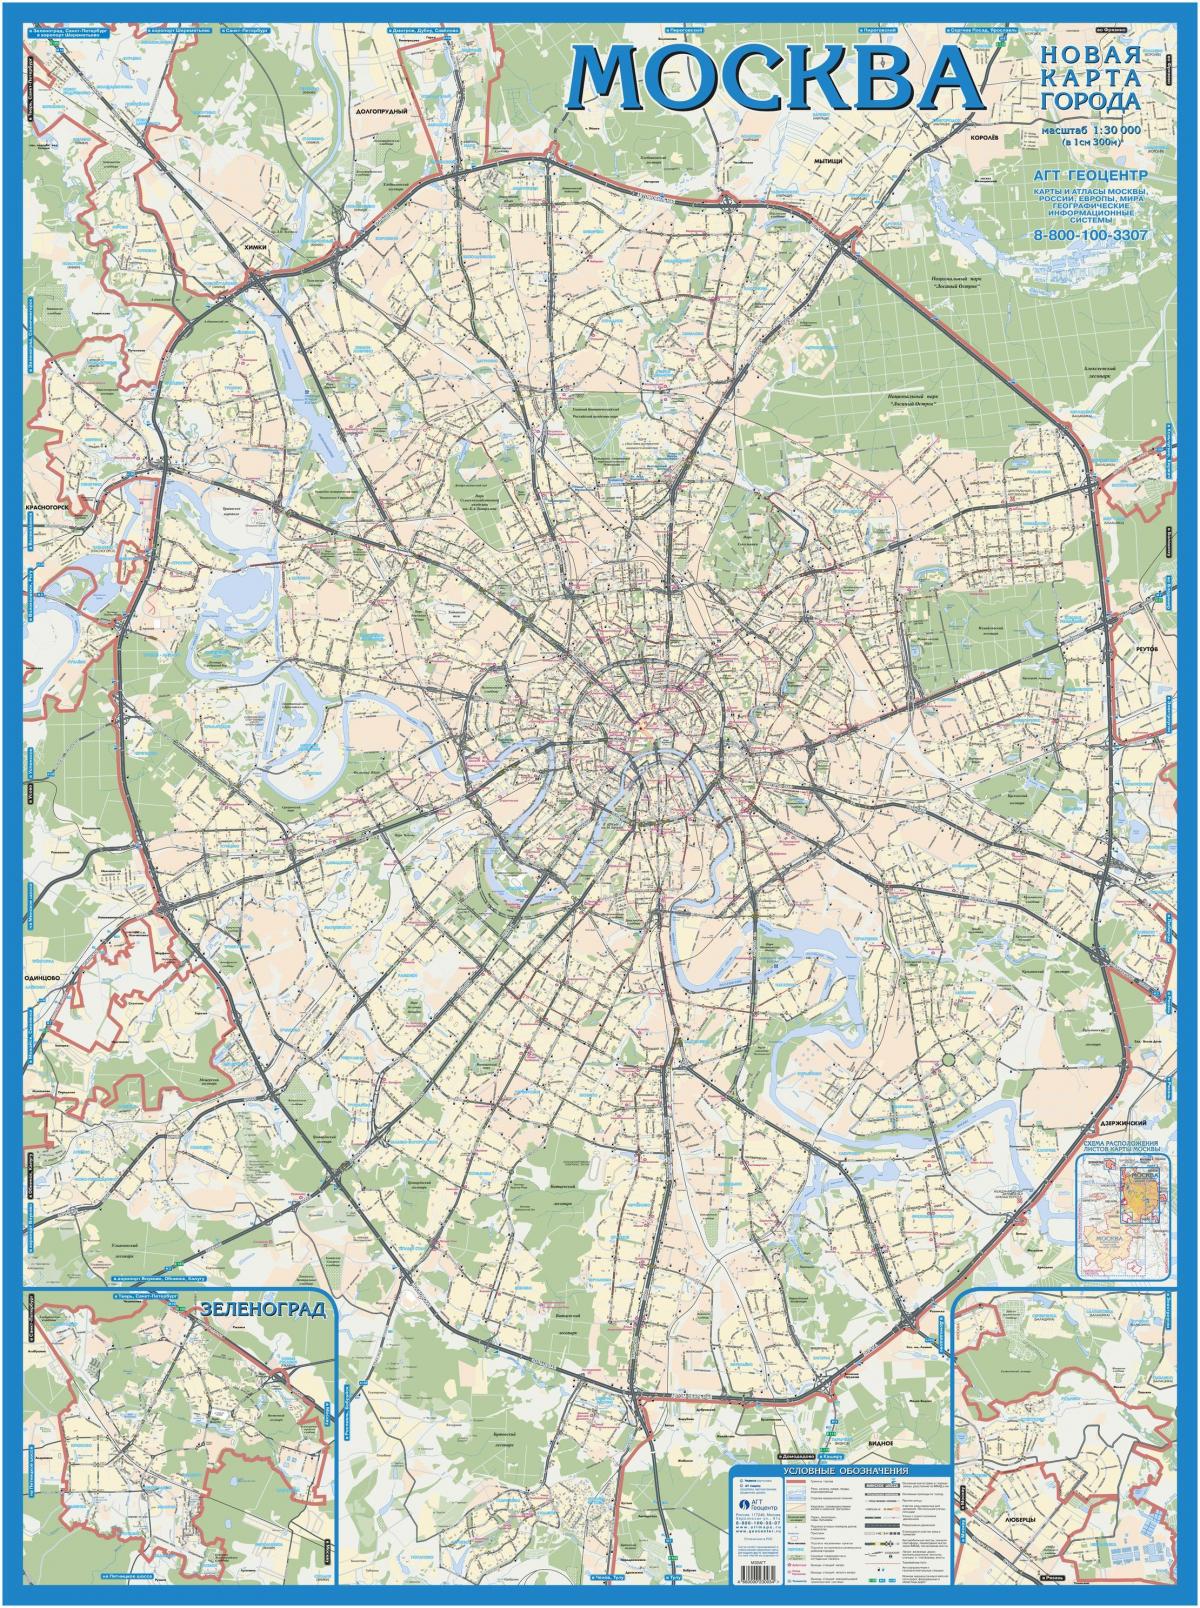 Moskva geografis peta